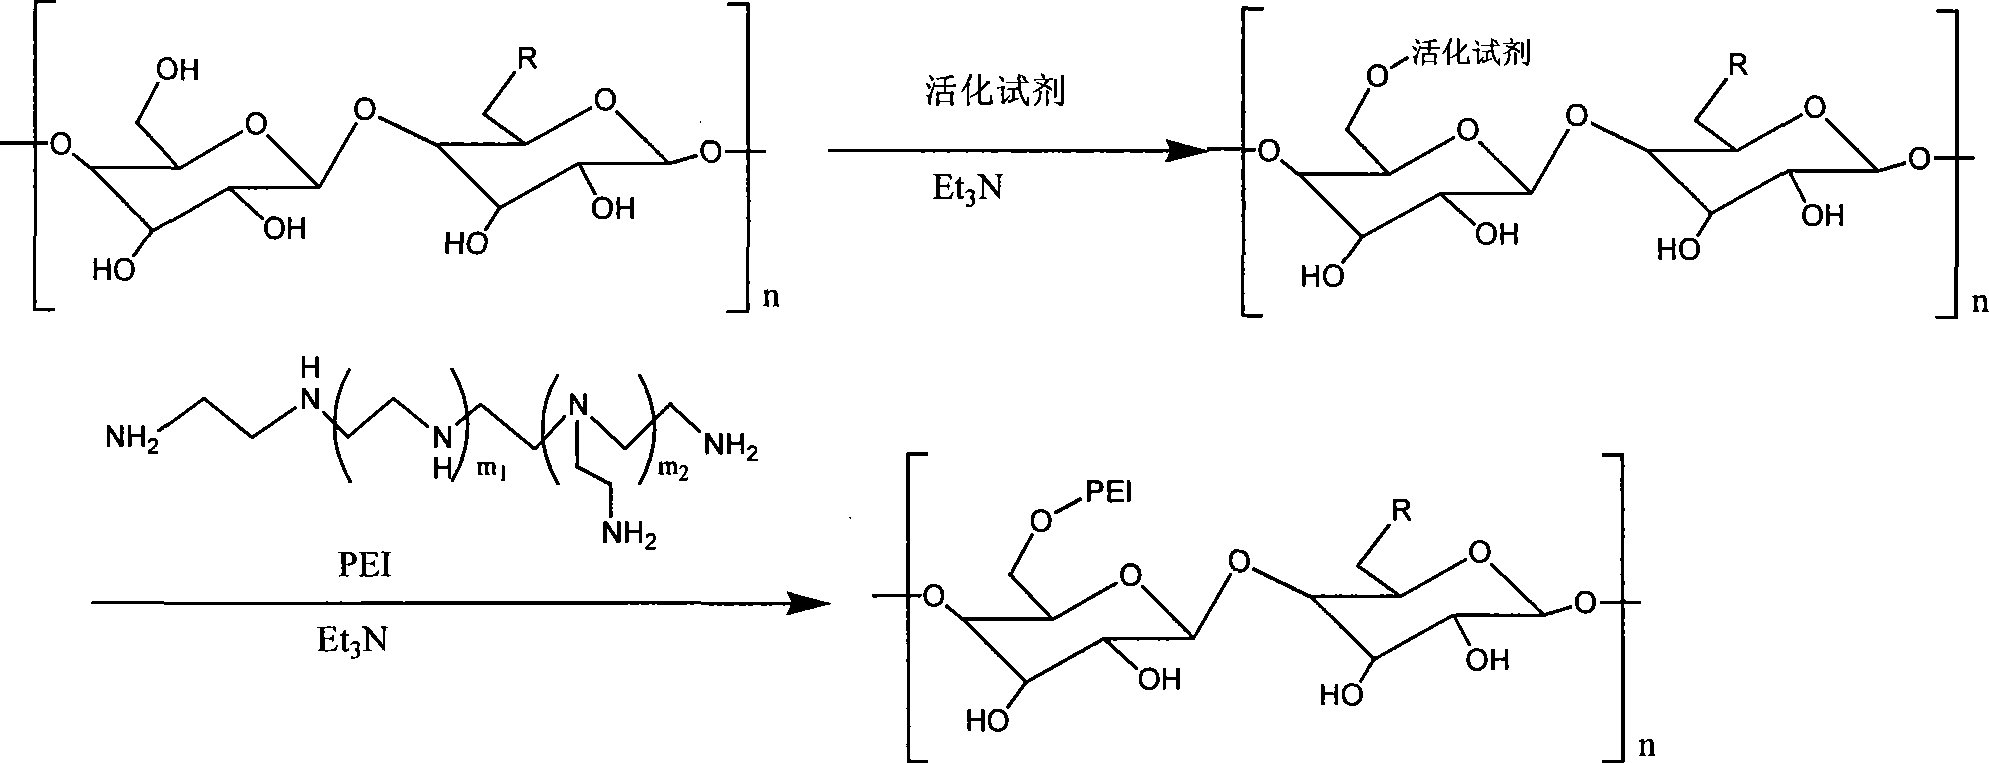 Method for modifying functional plants polysaccharide